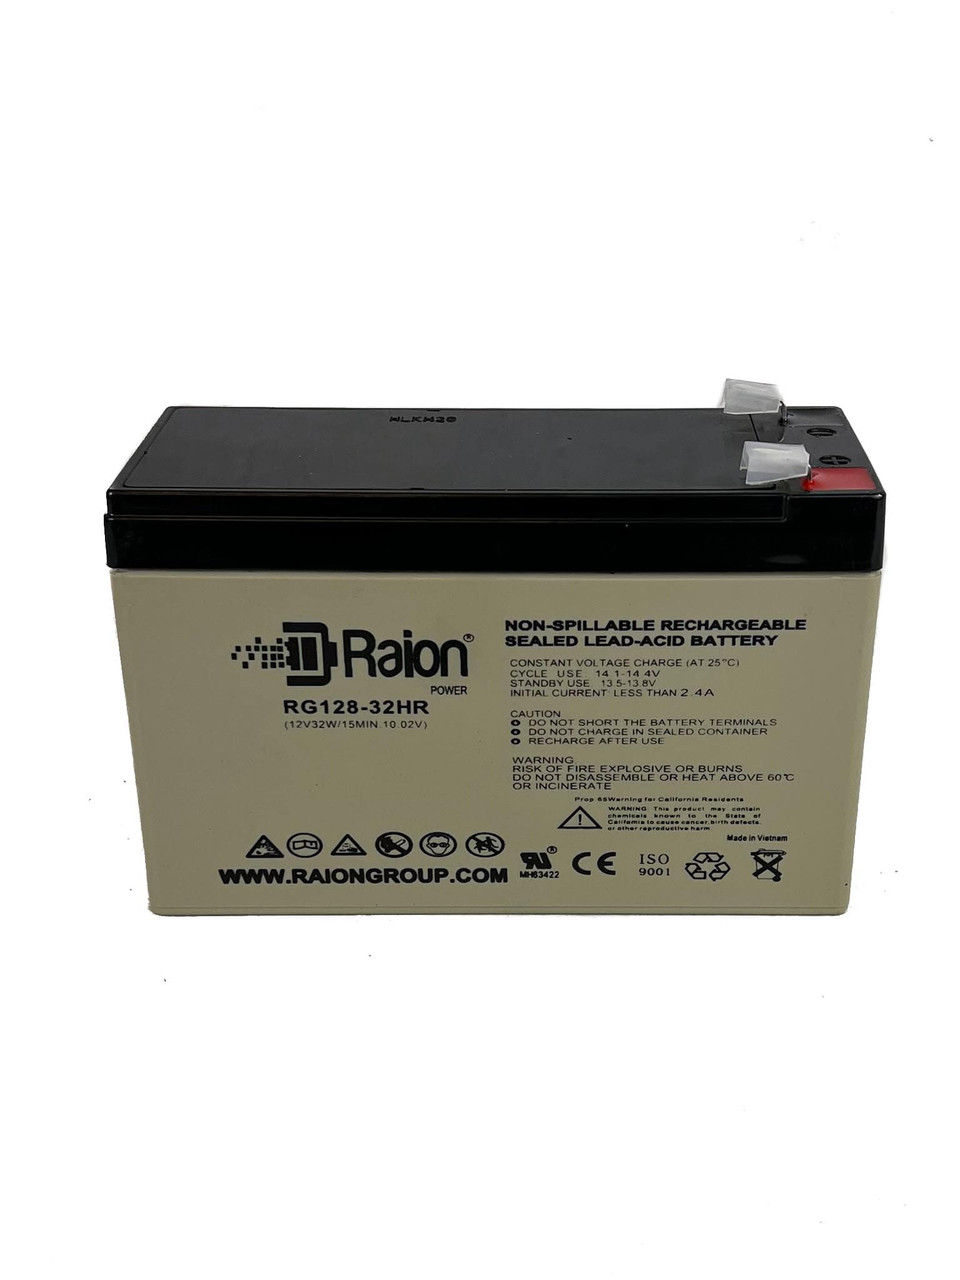 Raion Power 12V 7.5Ah 32W Rechargeable Battery for Gruber Power 58AGPS-HR1234FR